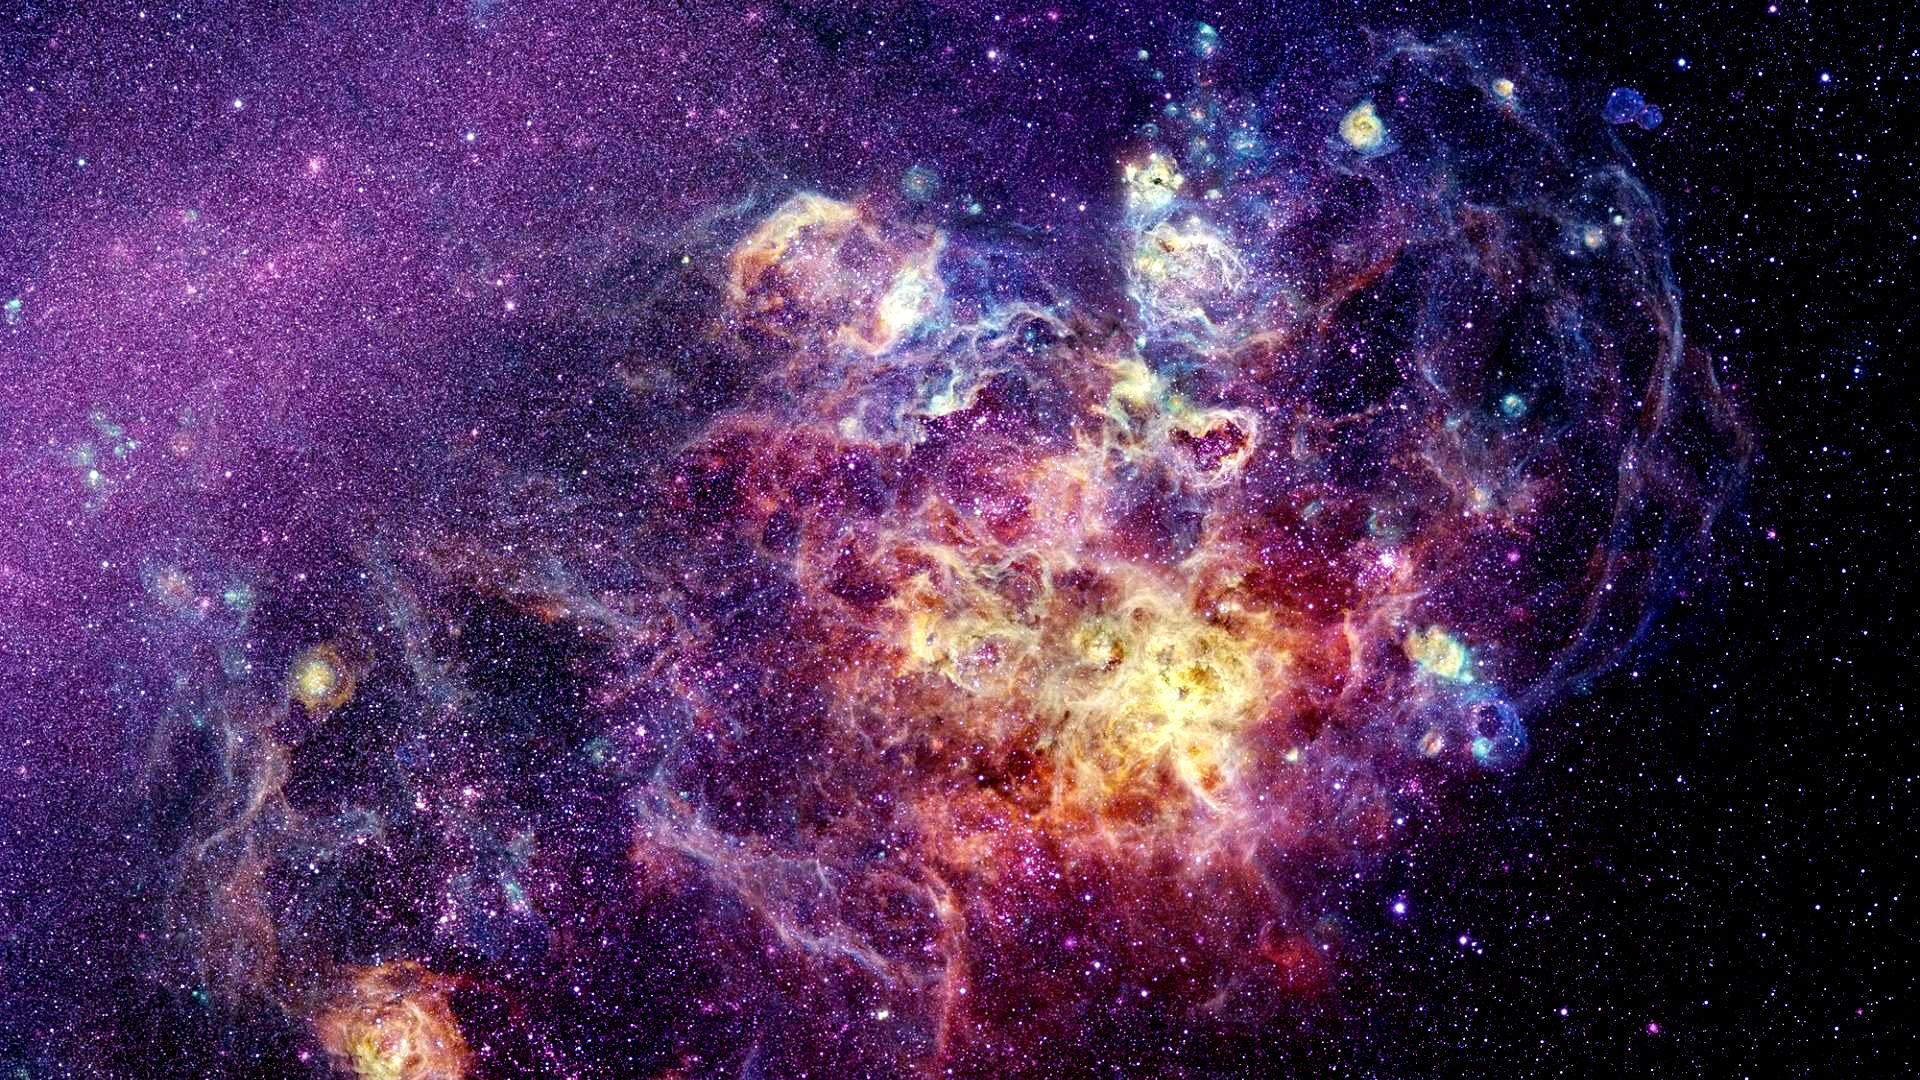 Nebula Computer Wallpapers, Desktop Backgrounds | 1920x1080 | ID ...